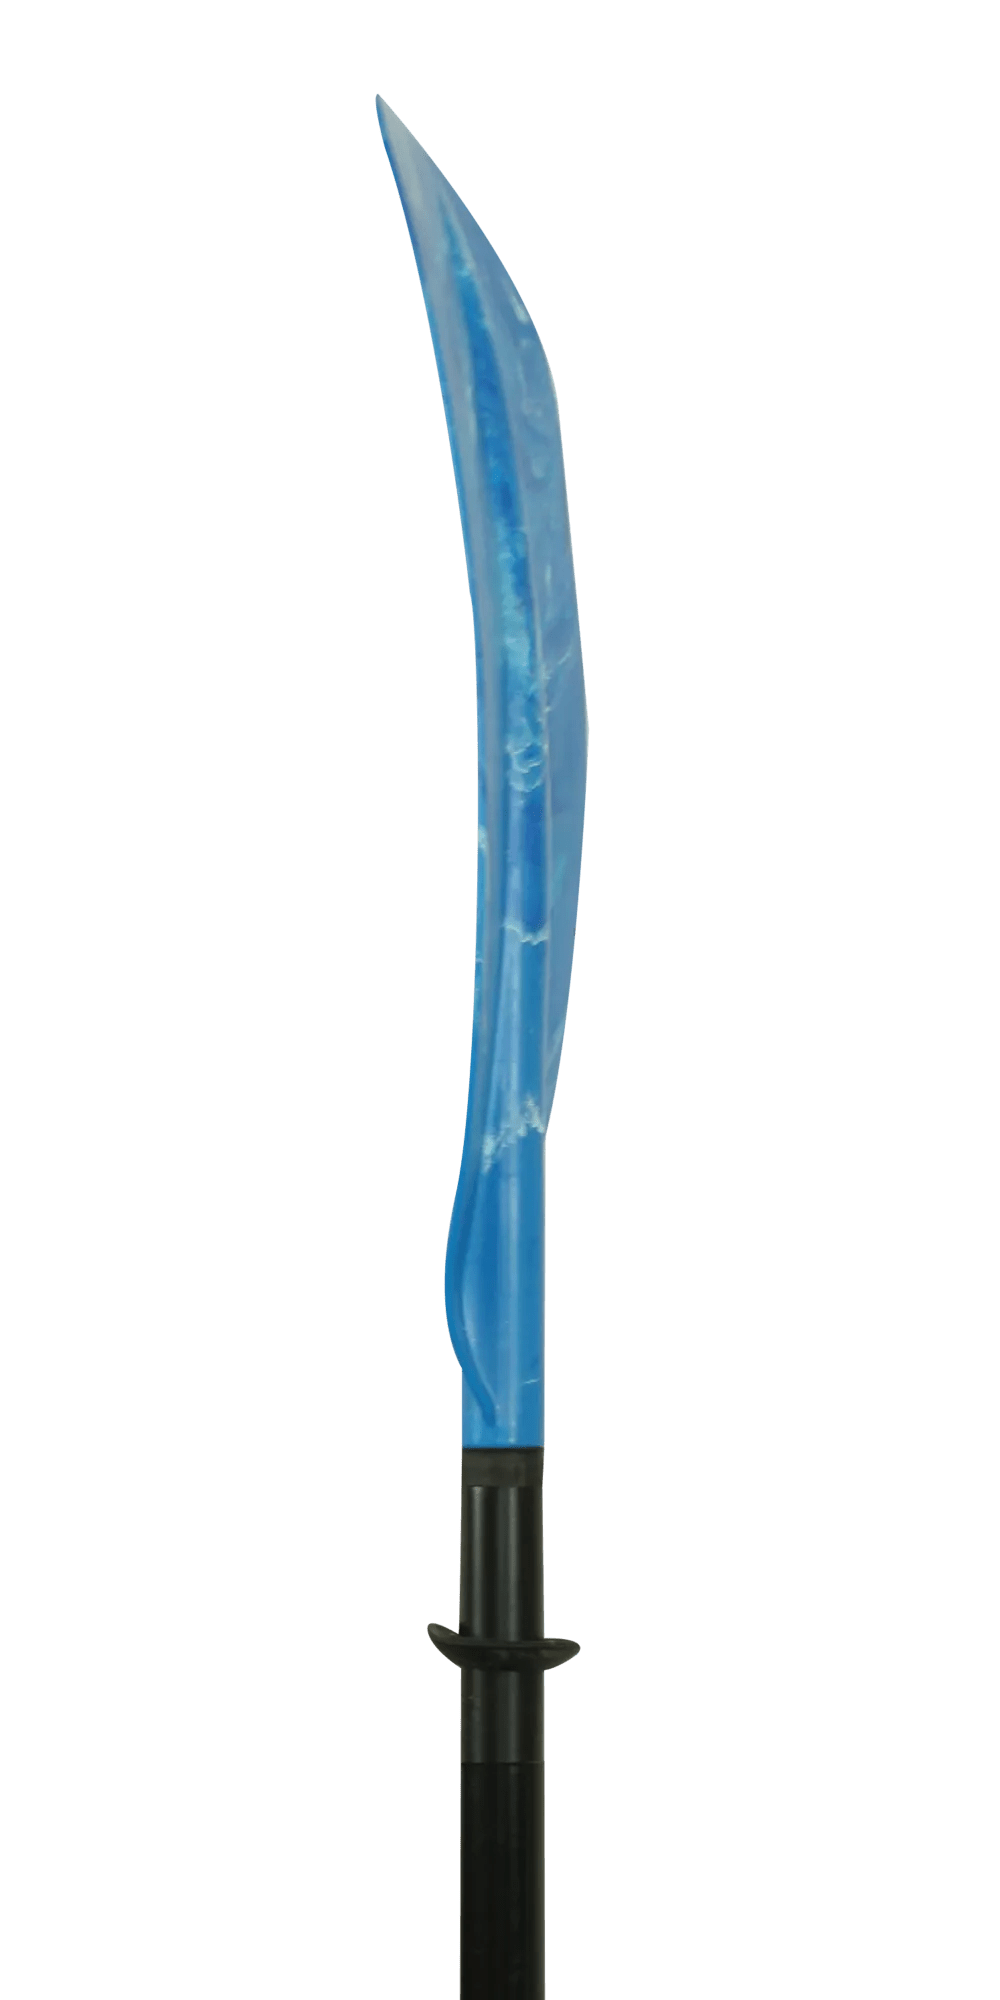 PELICAN - Poseidon Kayak Paddle 230 cm (90.5") - Blue - PS1134-00 - SIDE